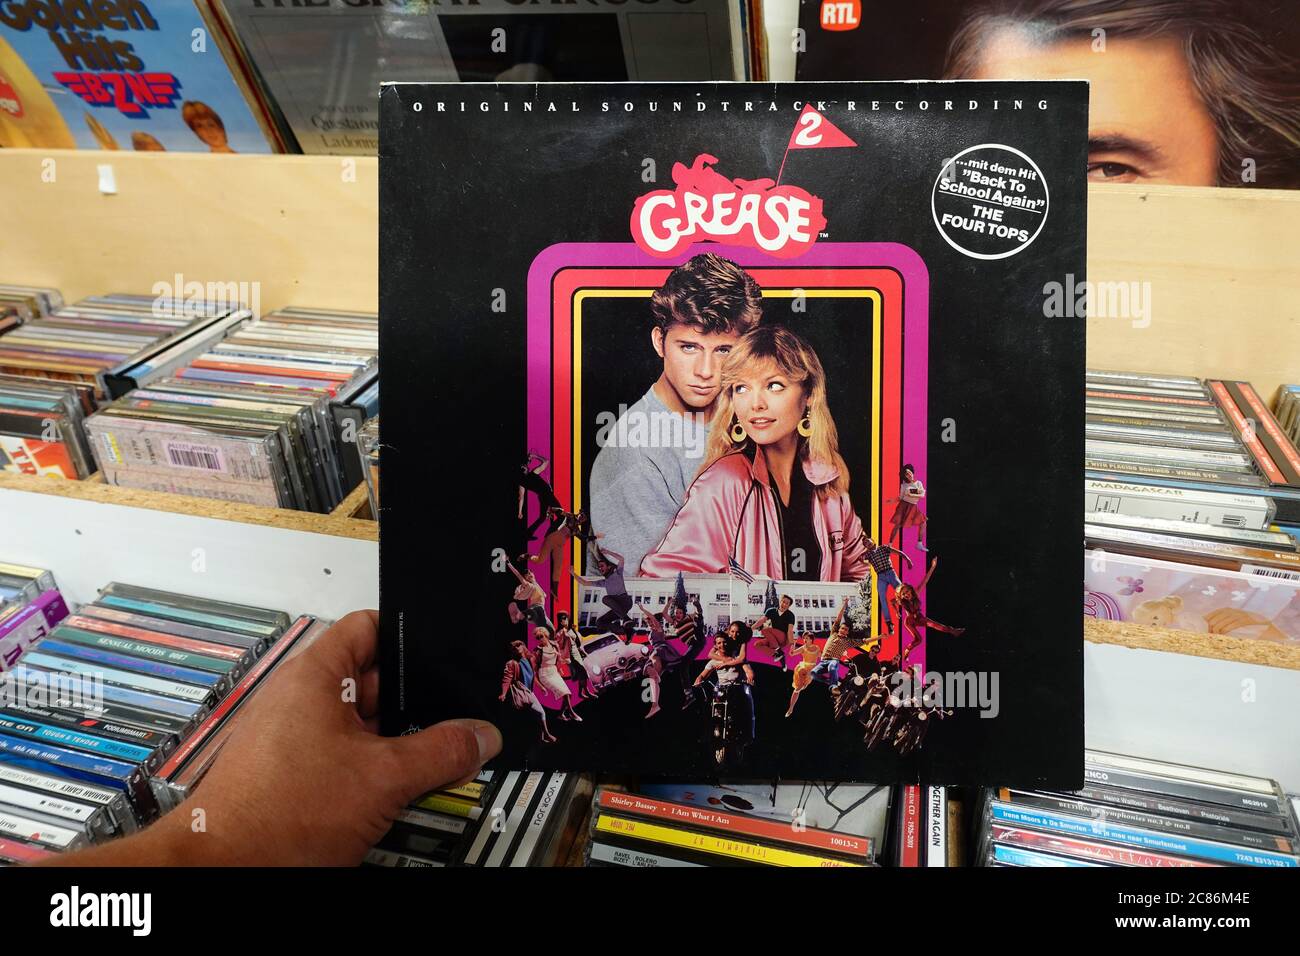 LP Album of Grease 2: The Original Soundtrack Recording Stock Photo